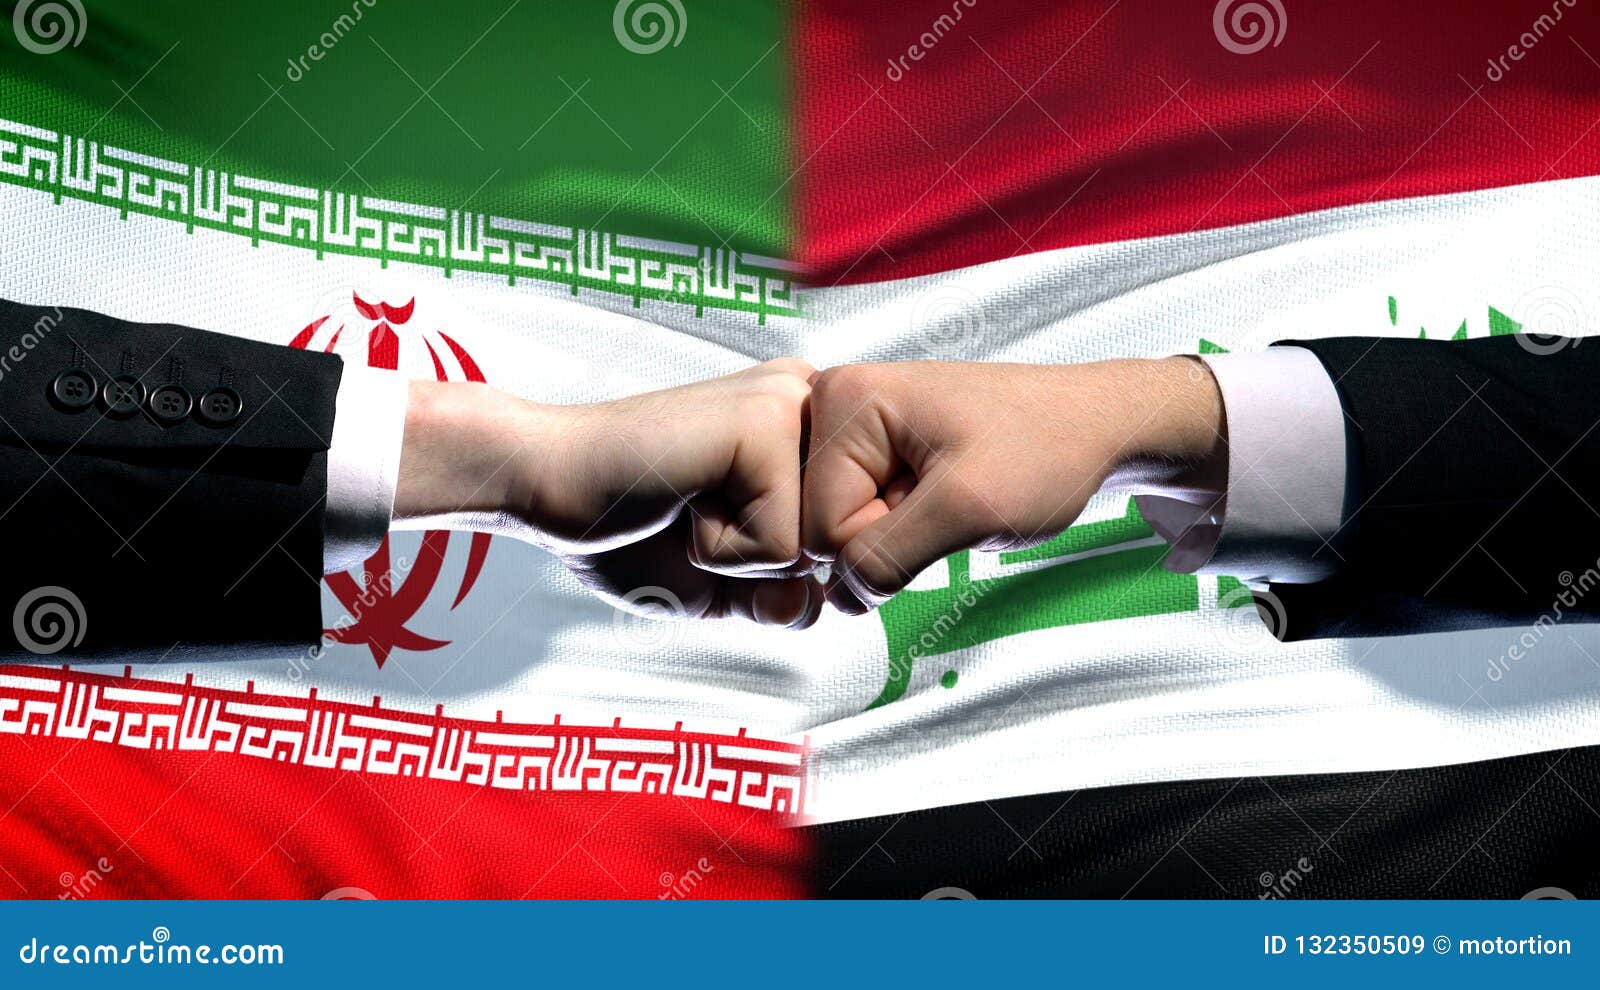 Iran Vs Iraq Conflict, International Relations Crisis, Fists On Flag